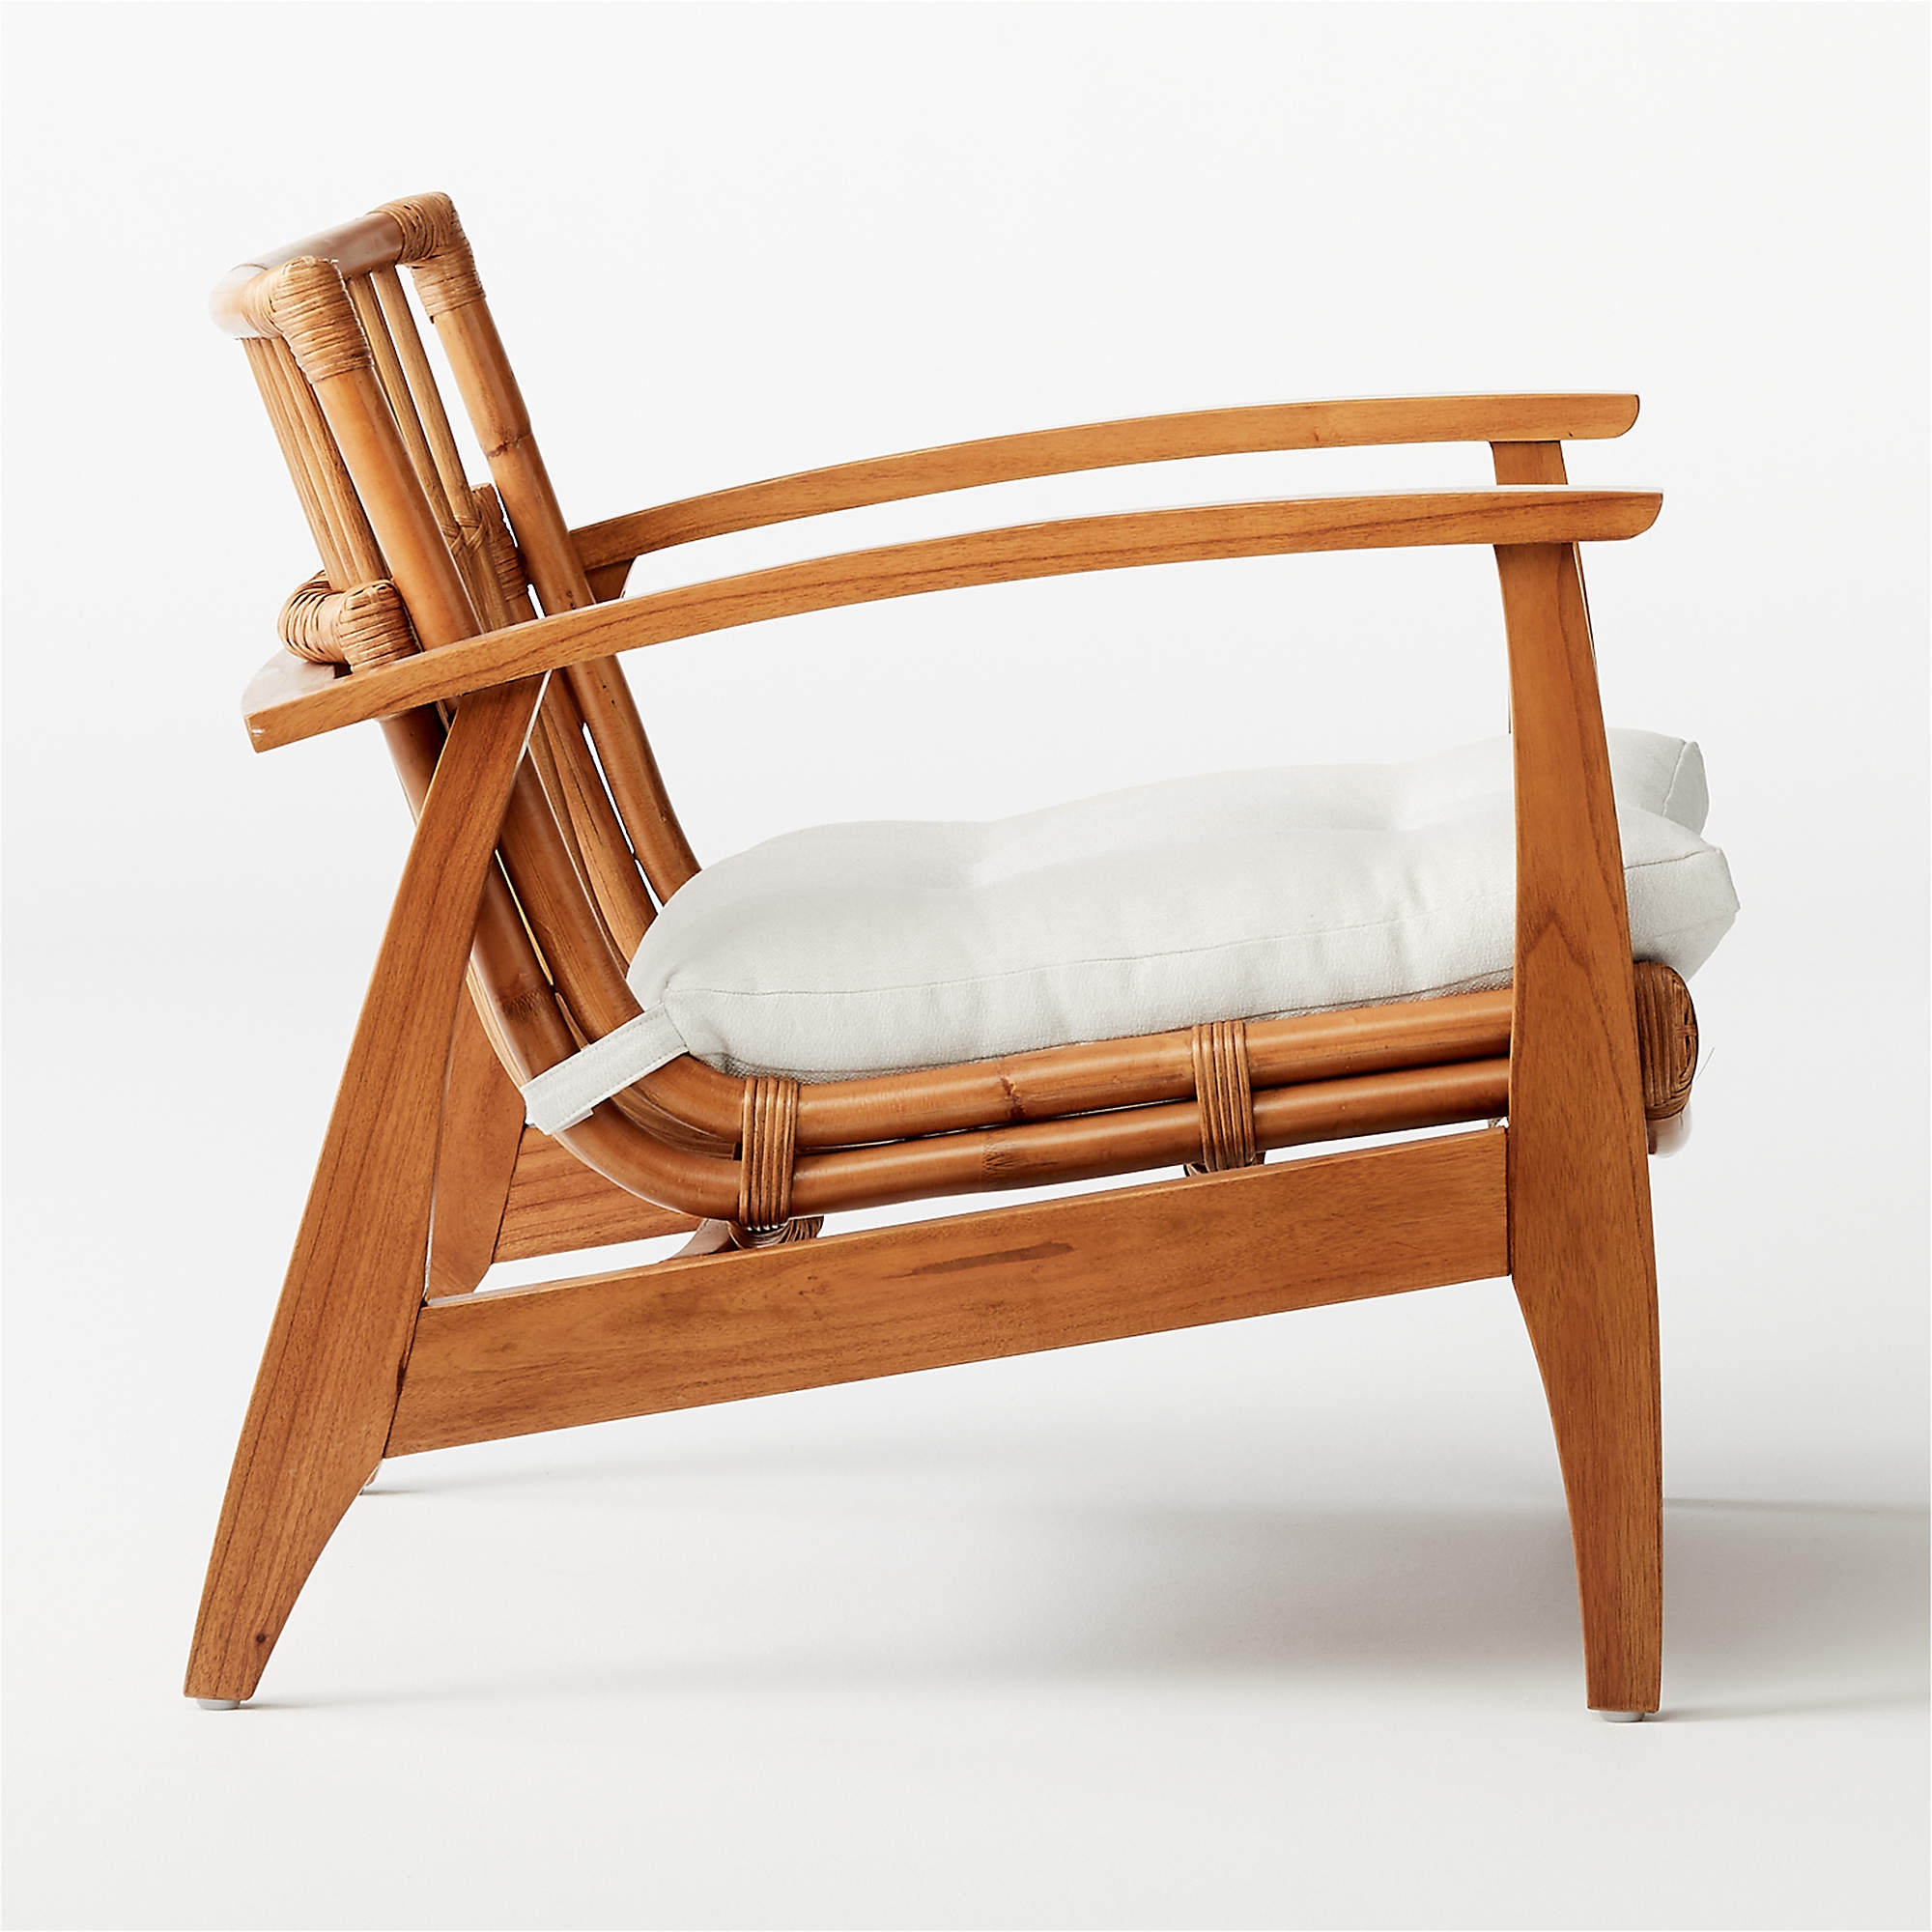 Noelie Rattan Lounge Chair with White Cushion, Mikkeli White - Image 5